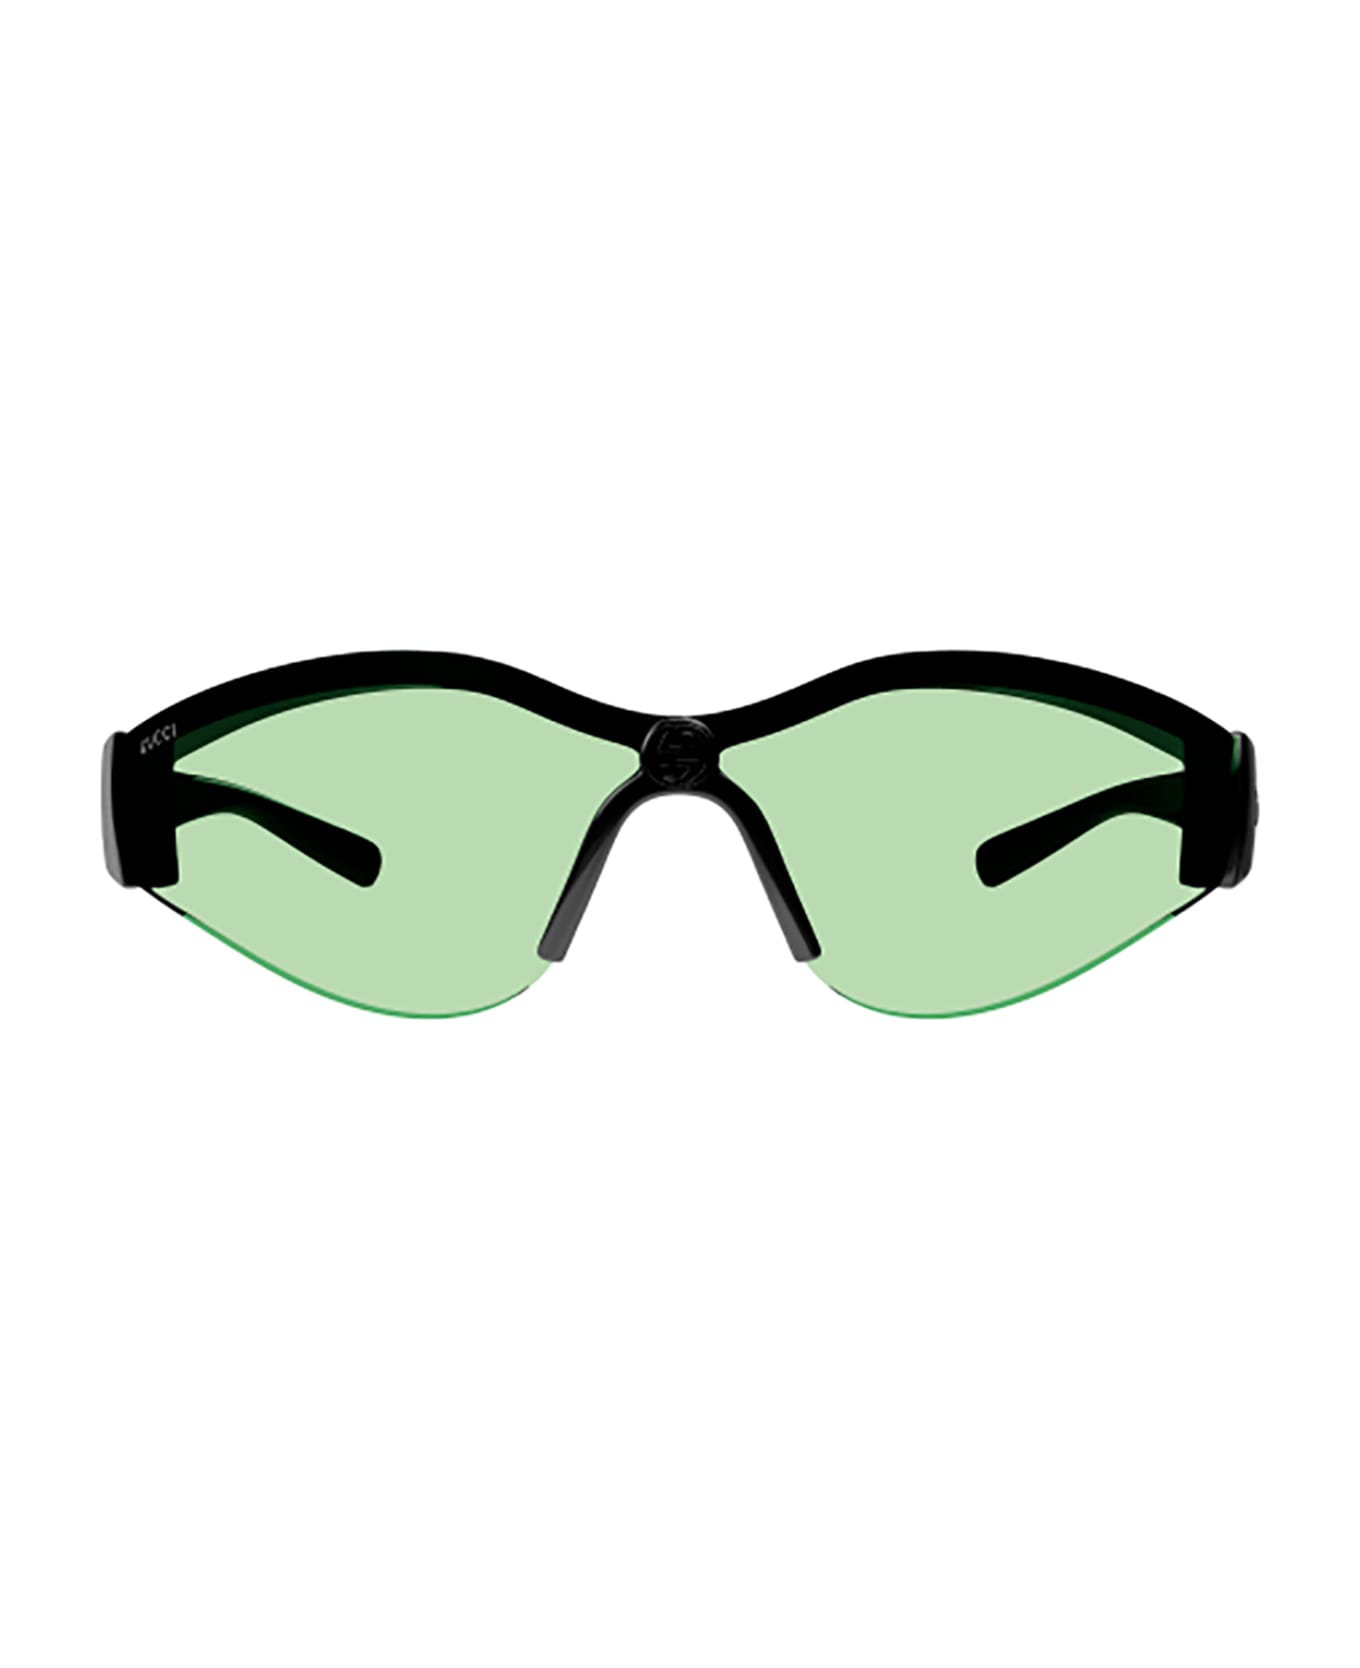 Gucci Eyewear GG1651S Sunglasses - Black Black Green